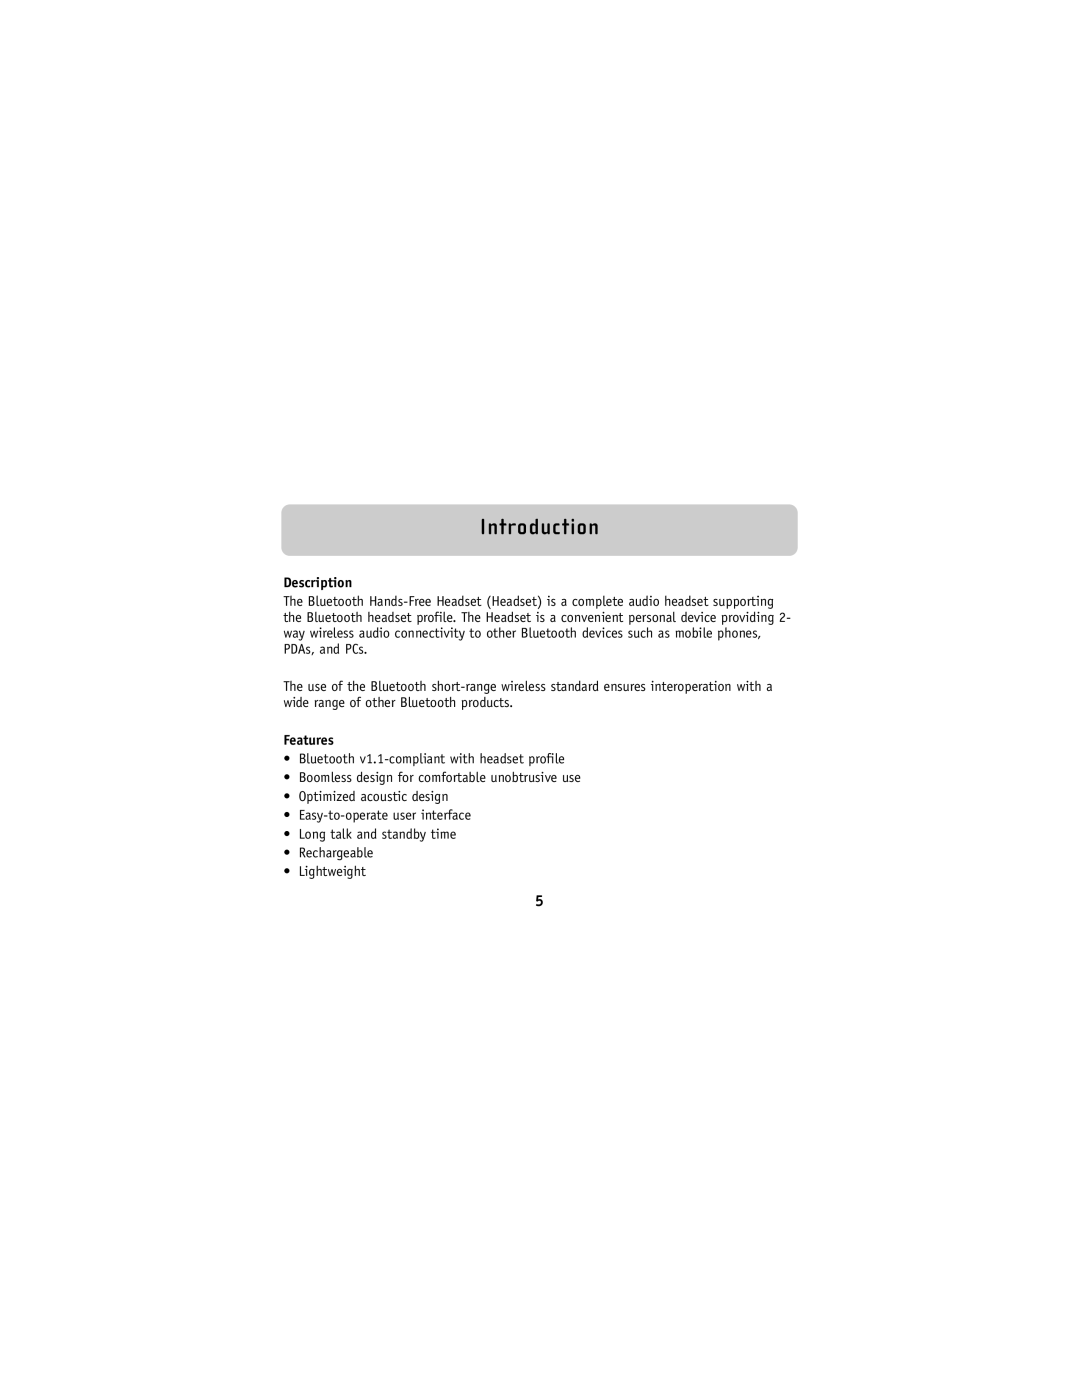 Belkin F8V9017 user manual Introduction, Description, Features 